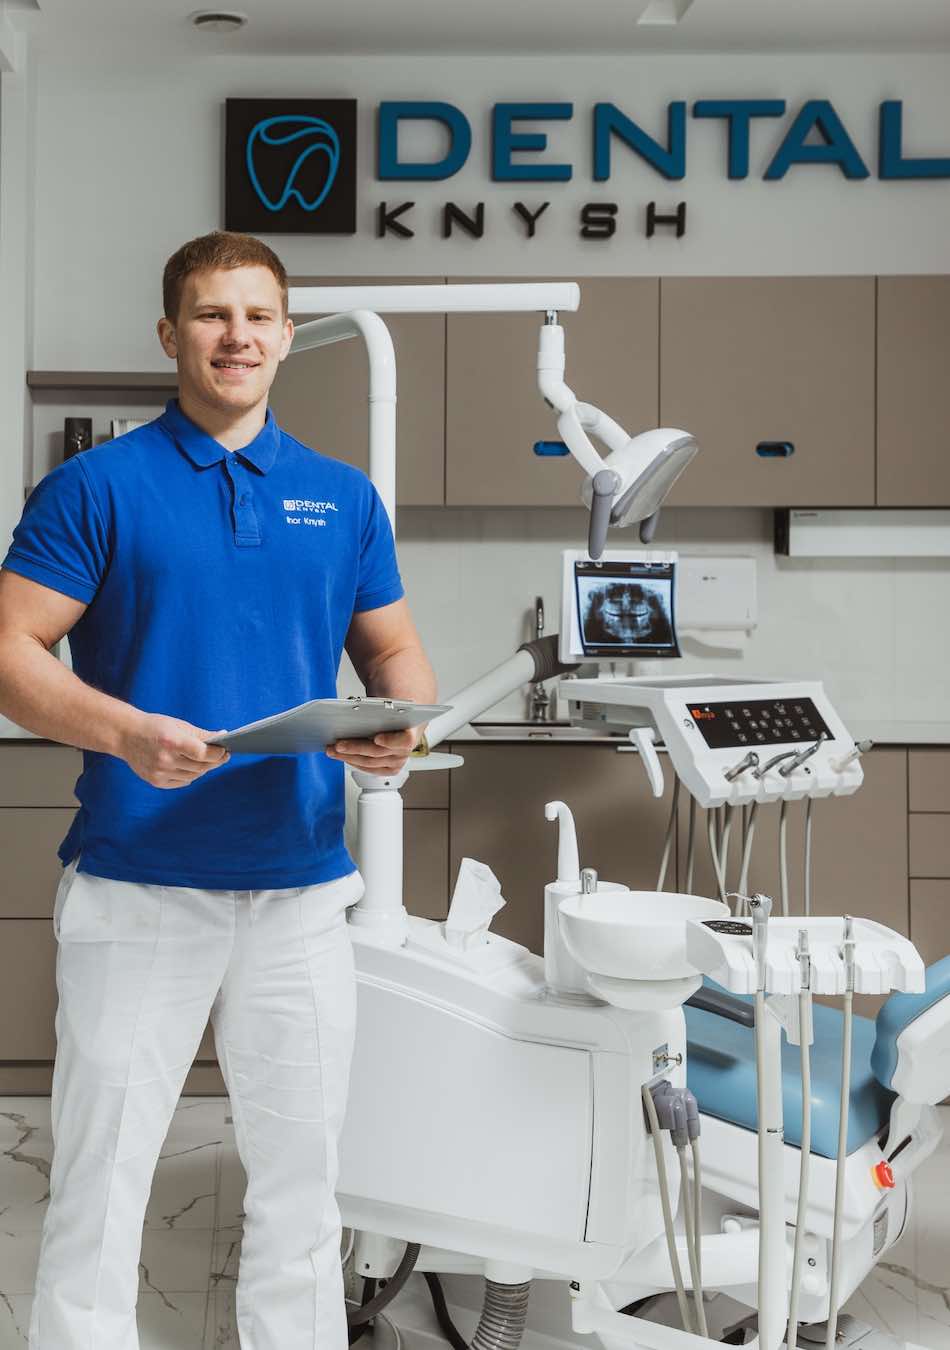 Ihor Knysh Dentist DentalKnysh